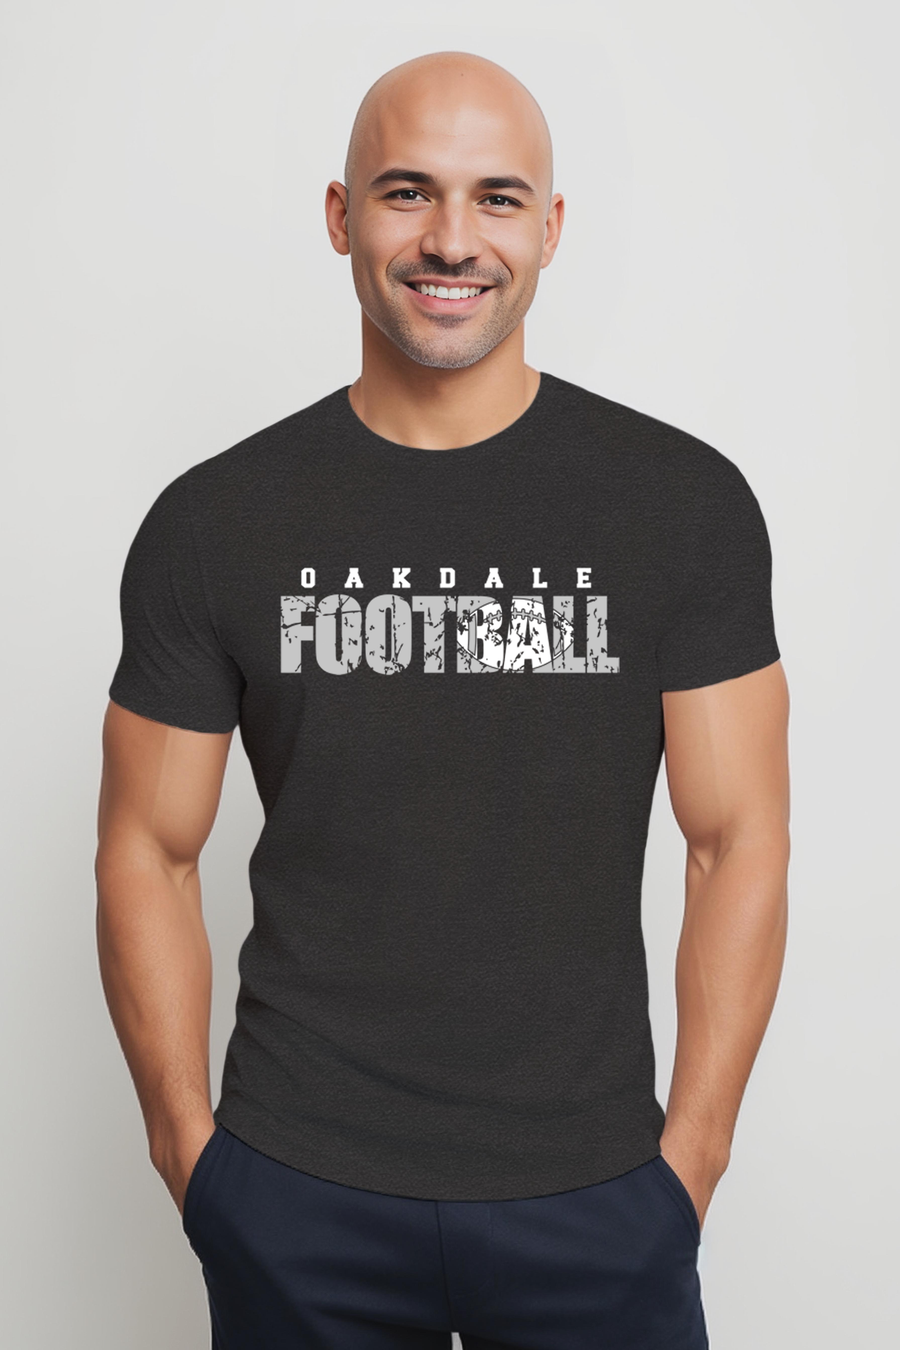 Oakdale Football- Distressed Design- Dark Gray Unisex Shirt (OHS)